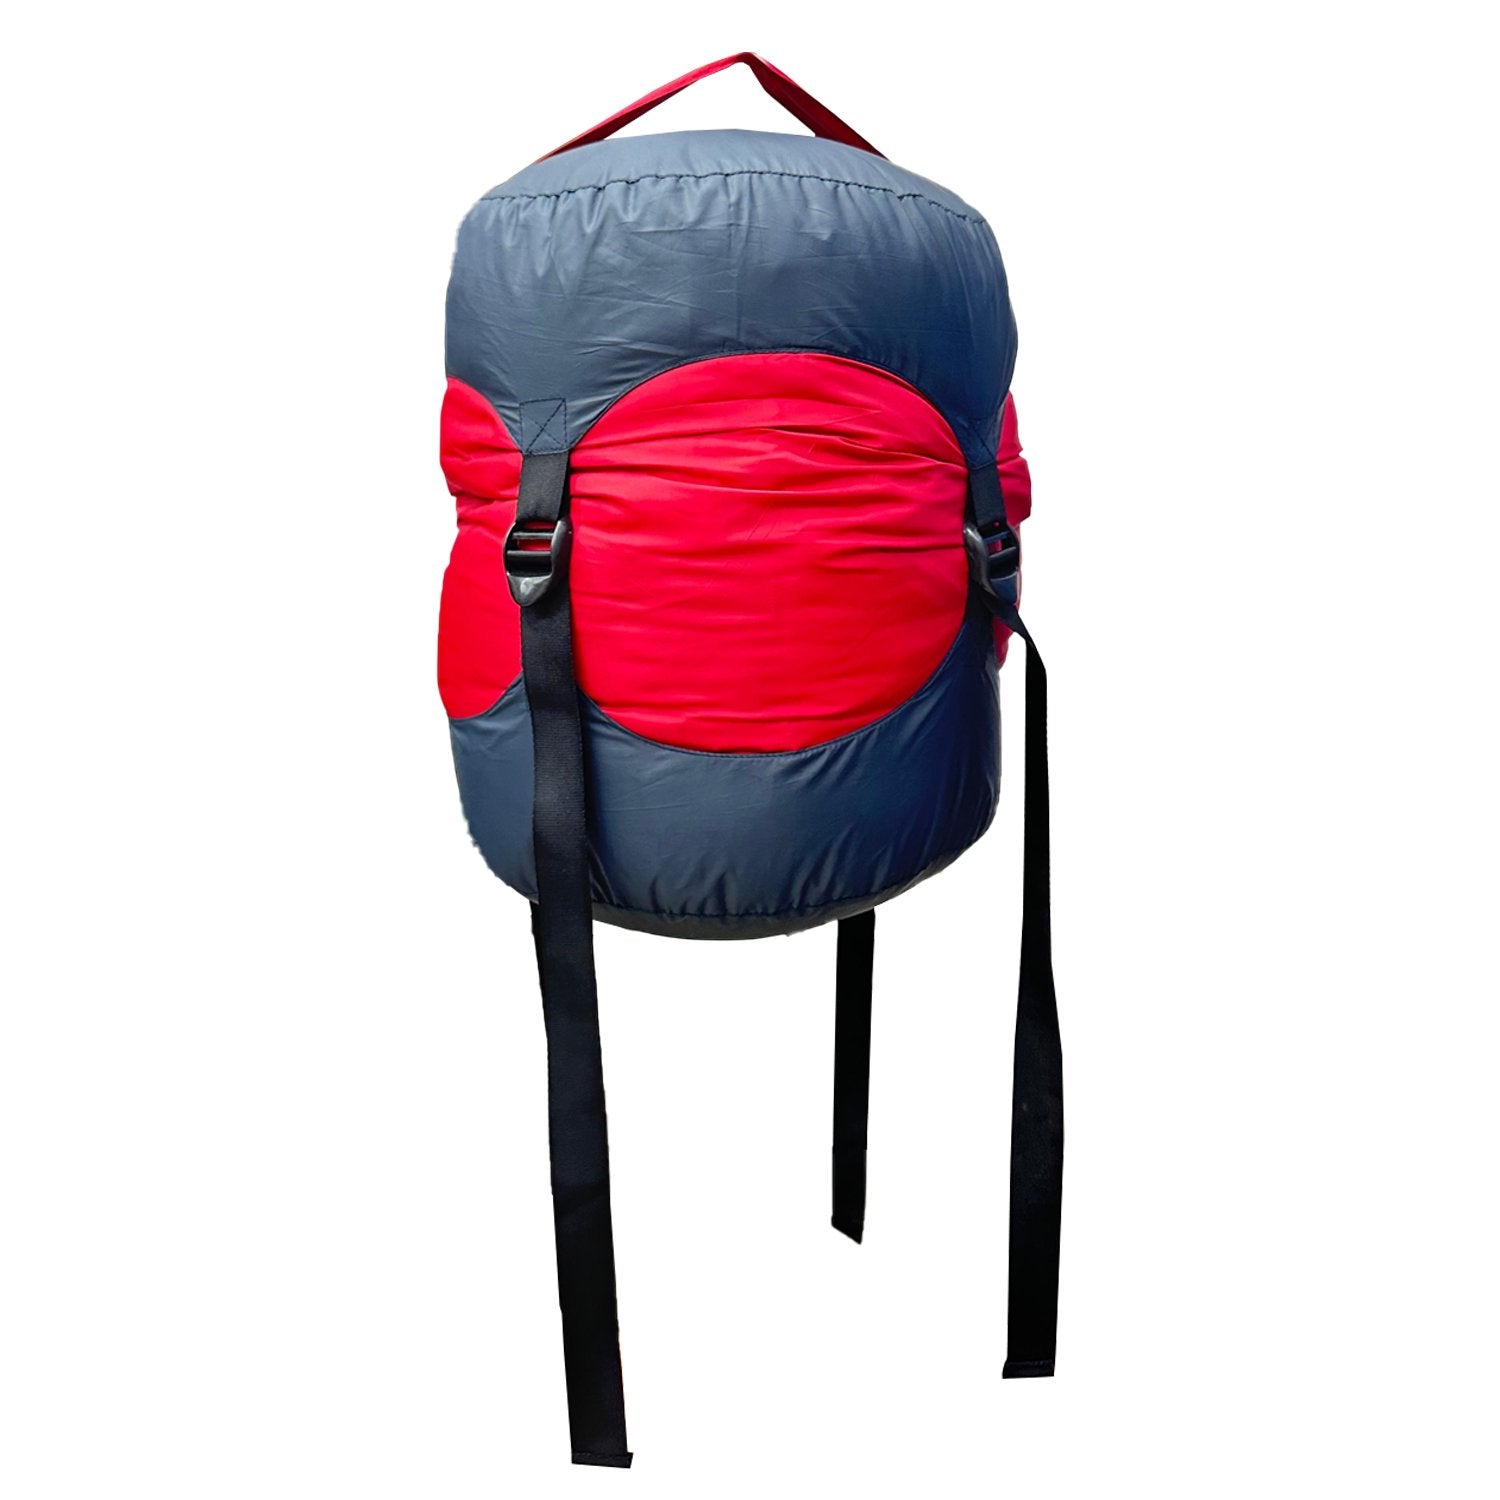 Buy Gokyo K2 Sleeping Bags for upto -20 Degrees | Sleeping Bag at Gokyo Outdoor Clothing & Gear